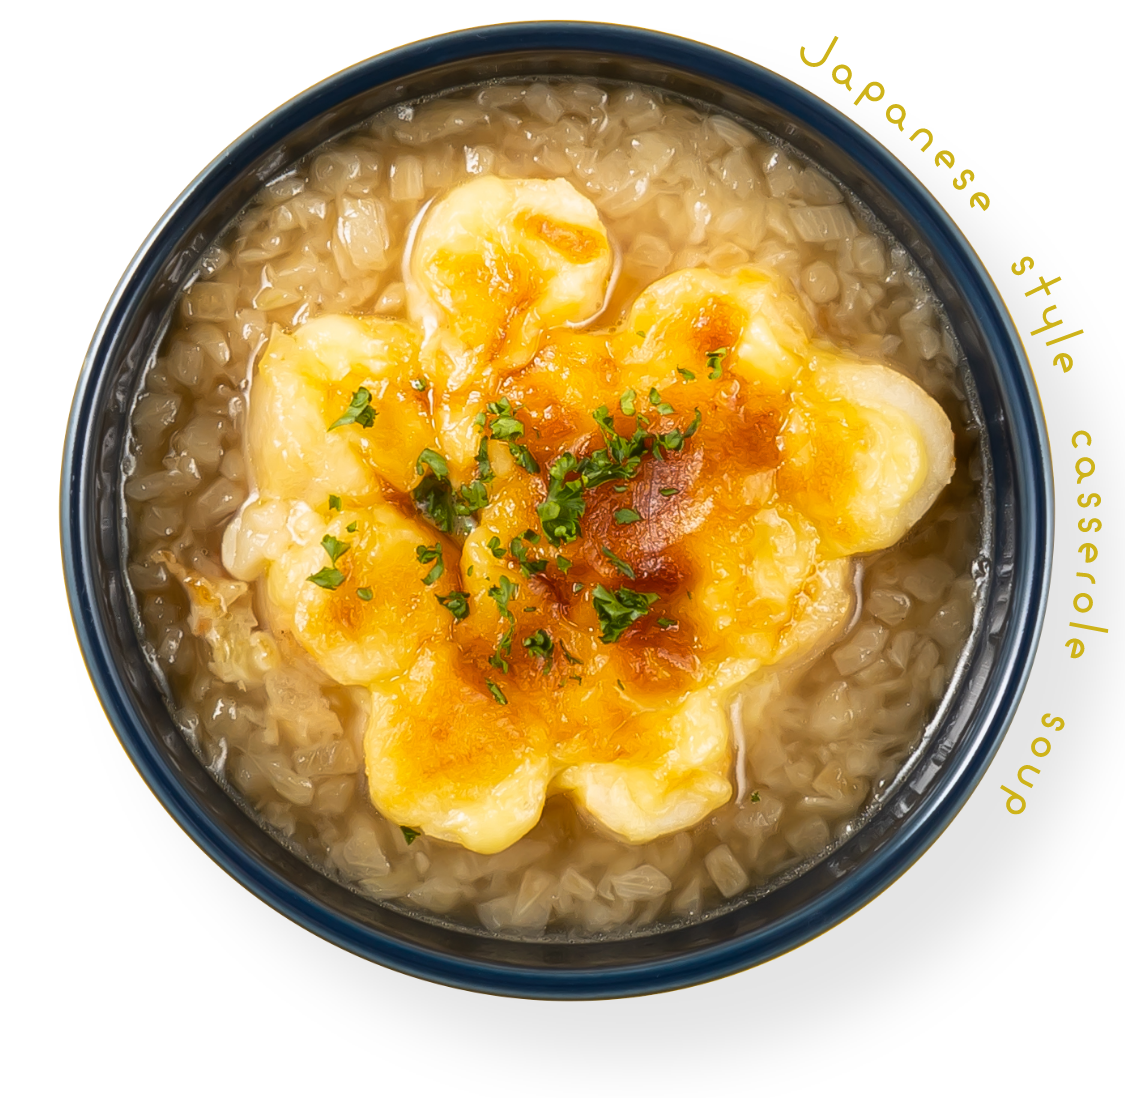 Japanese style casserole soup